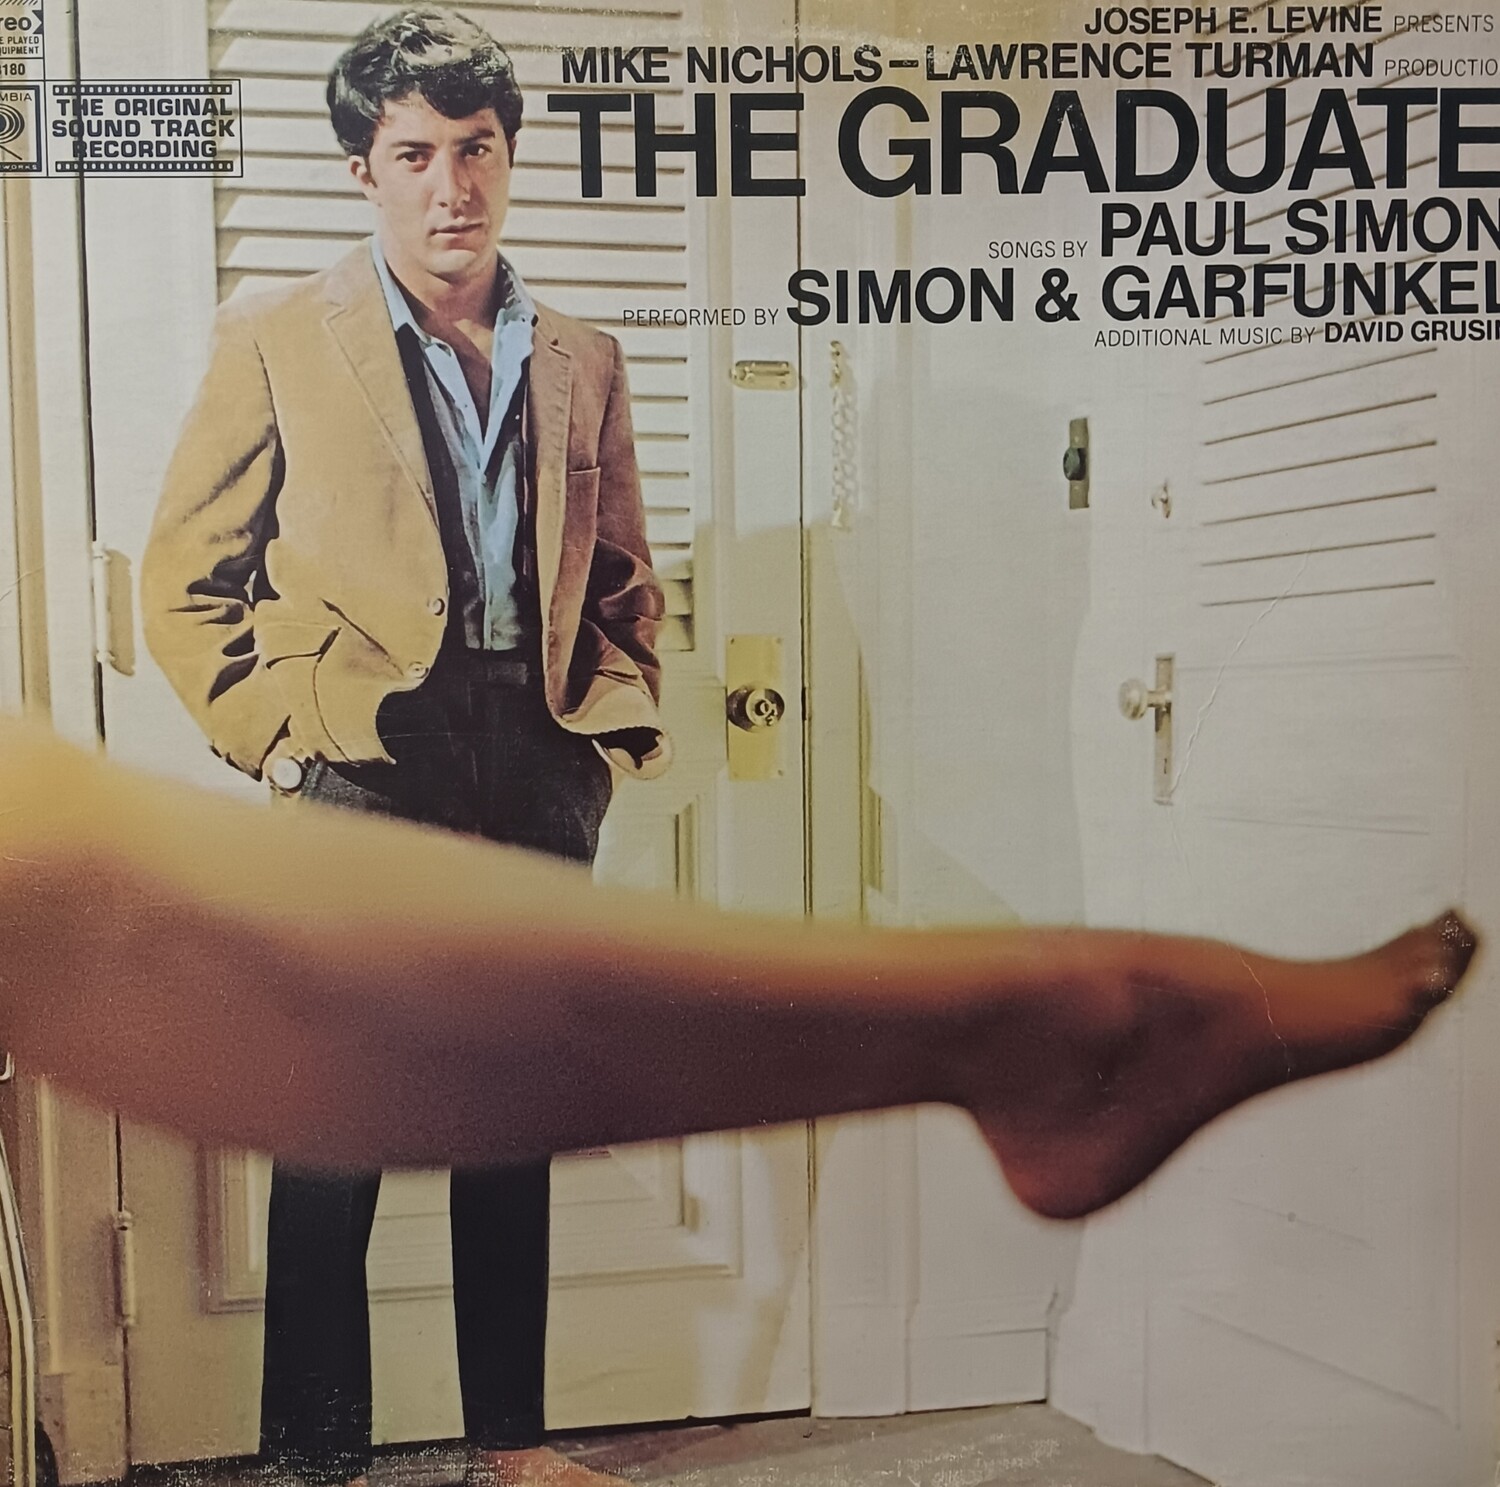 PAUL SIMON - The graduate soundtrack